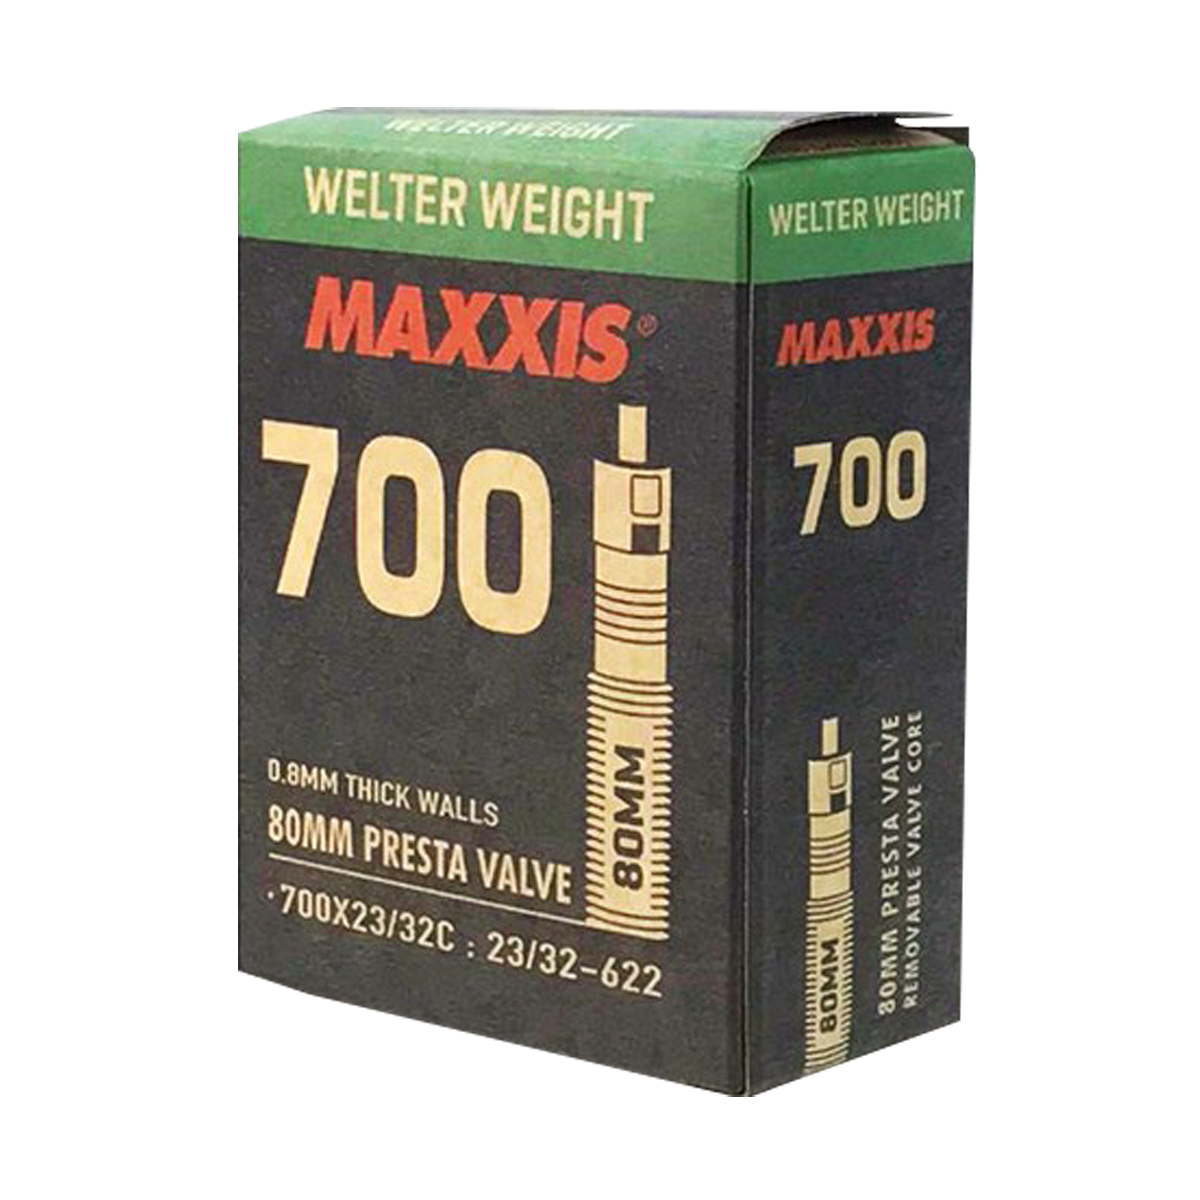 CAMARA MAXXIS - 700X23/32c VP 80MM